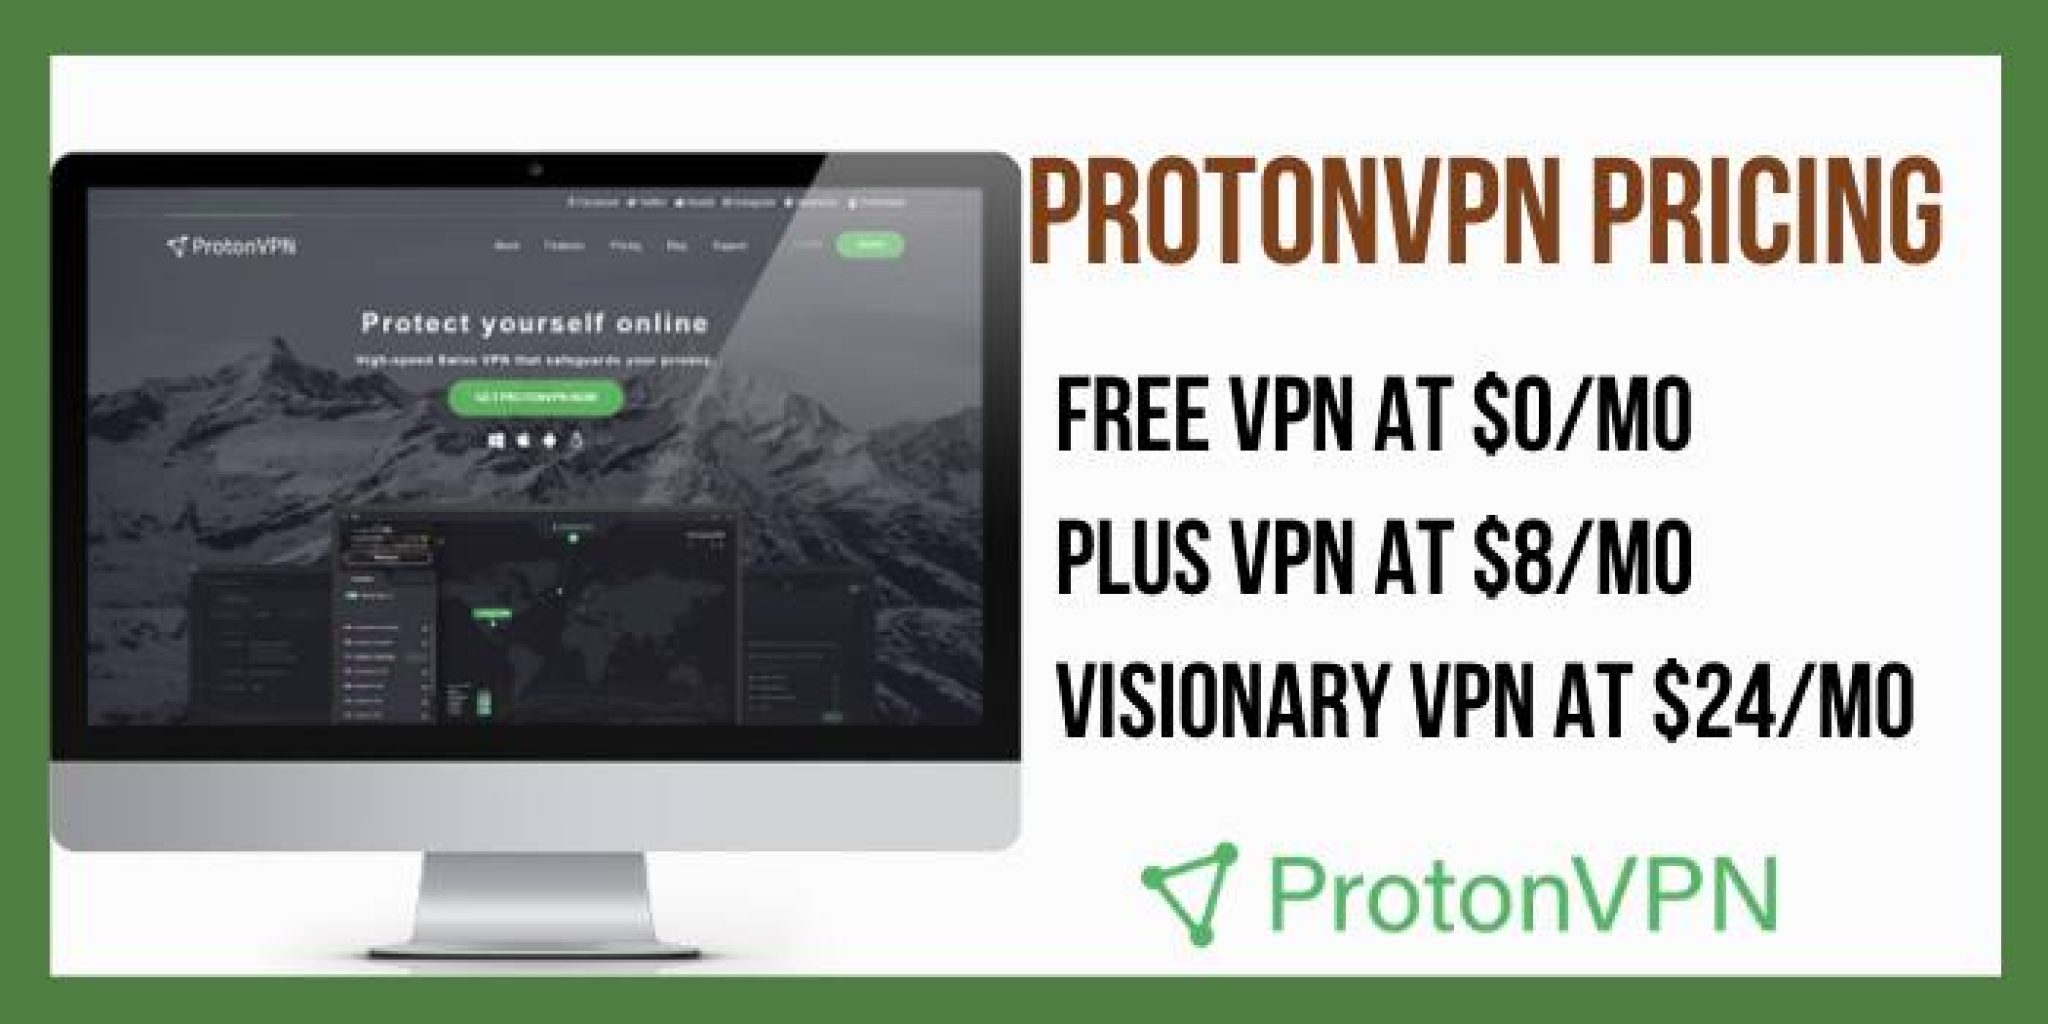 ProtonVPN Free 3.1.0 download the new version